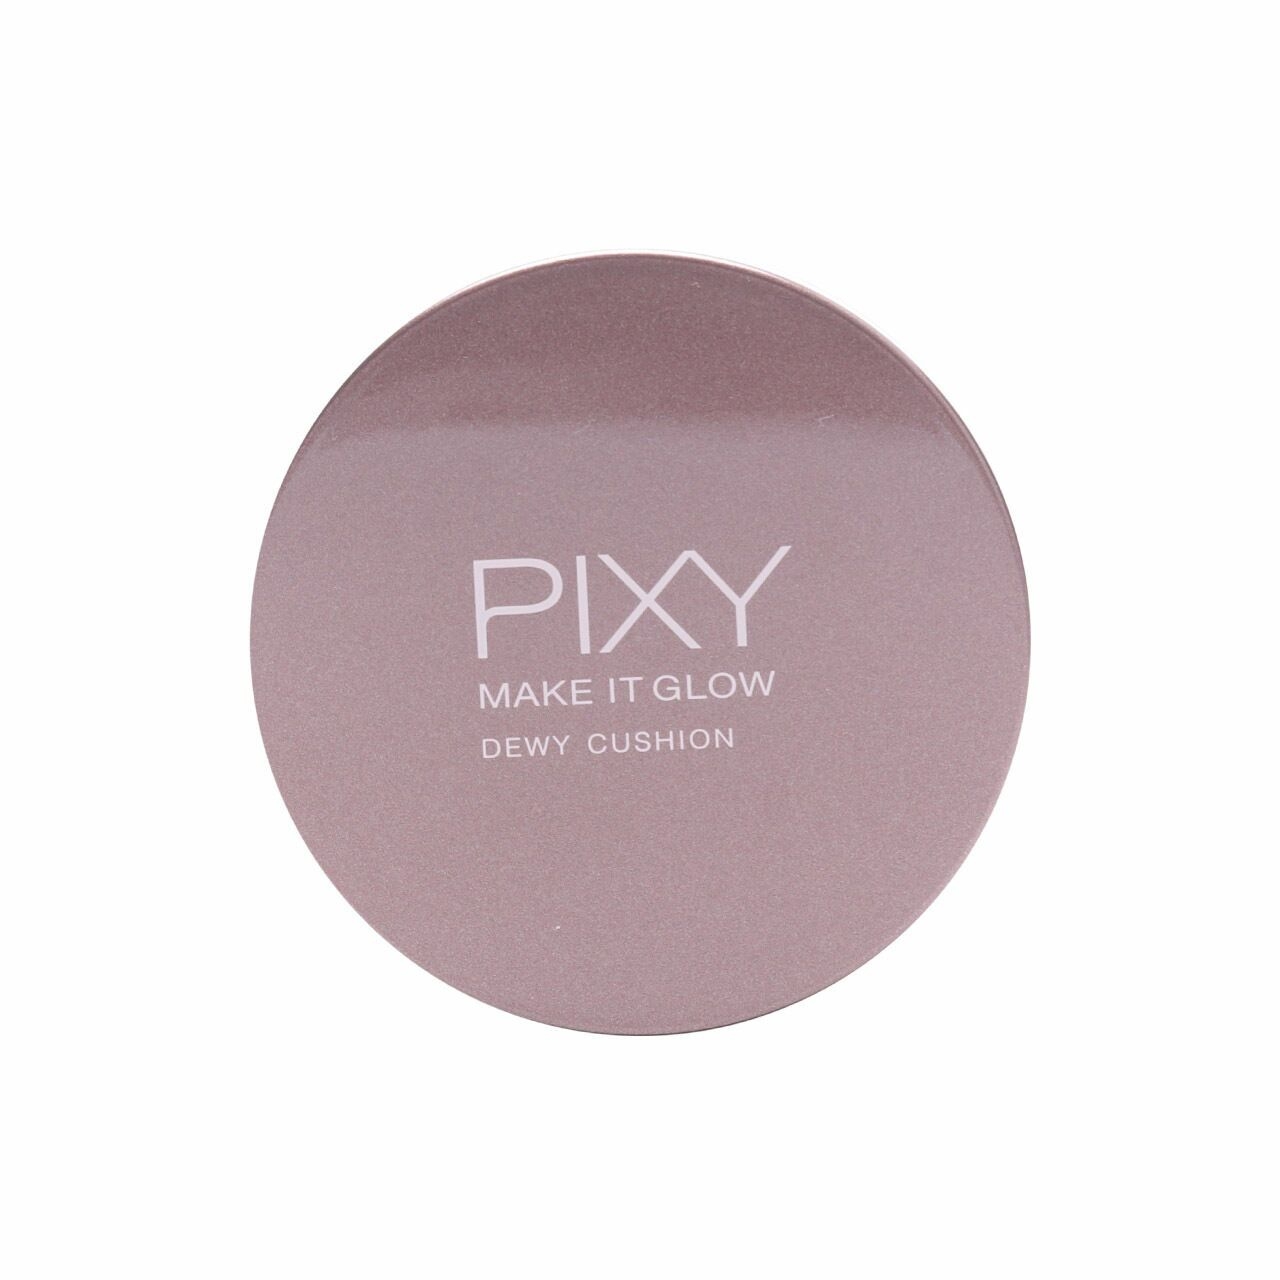 Pixy Dewy Cushion with Moisturizing Botanical Extract Smooth Polished Powder SPF 23 PA++ 101 Light Beige Faces